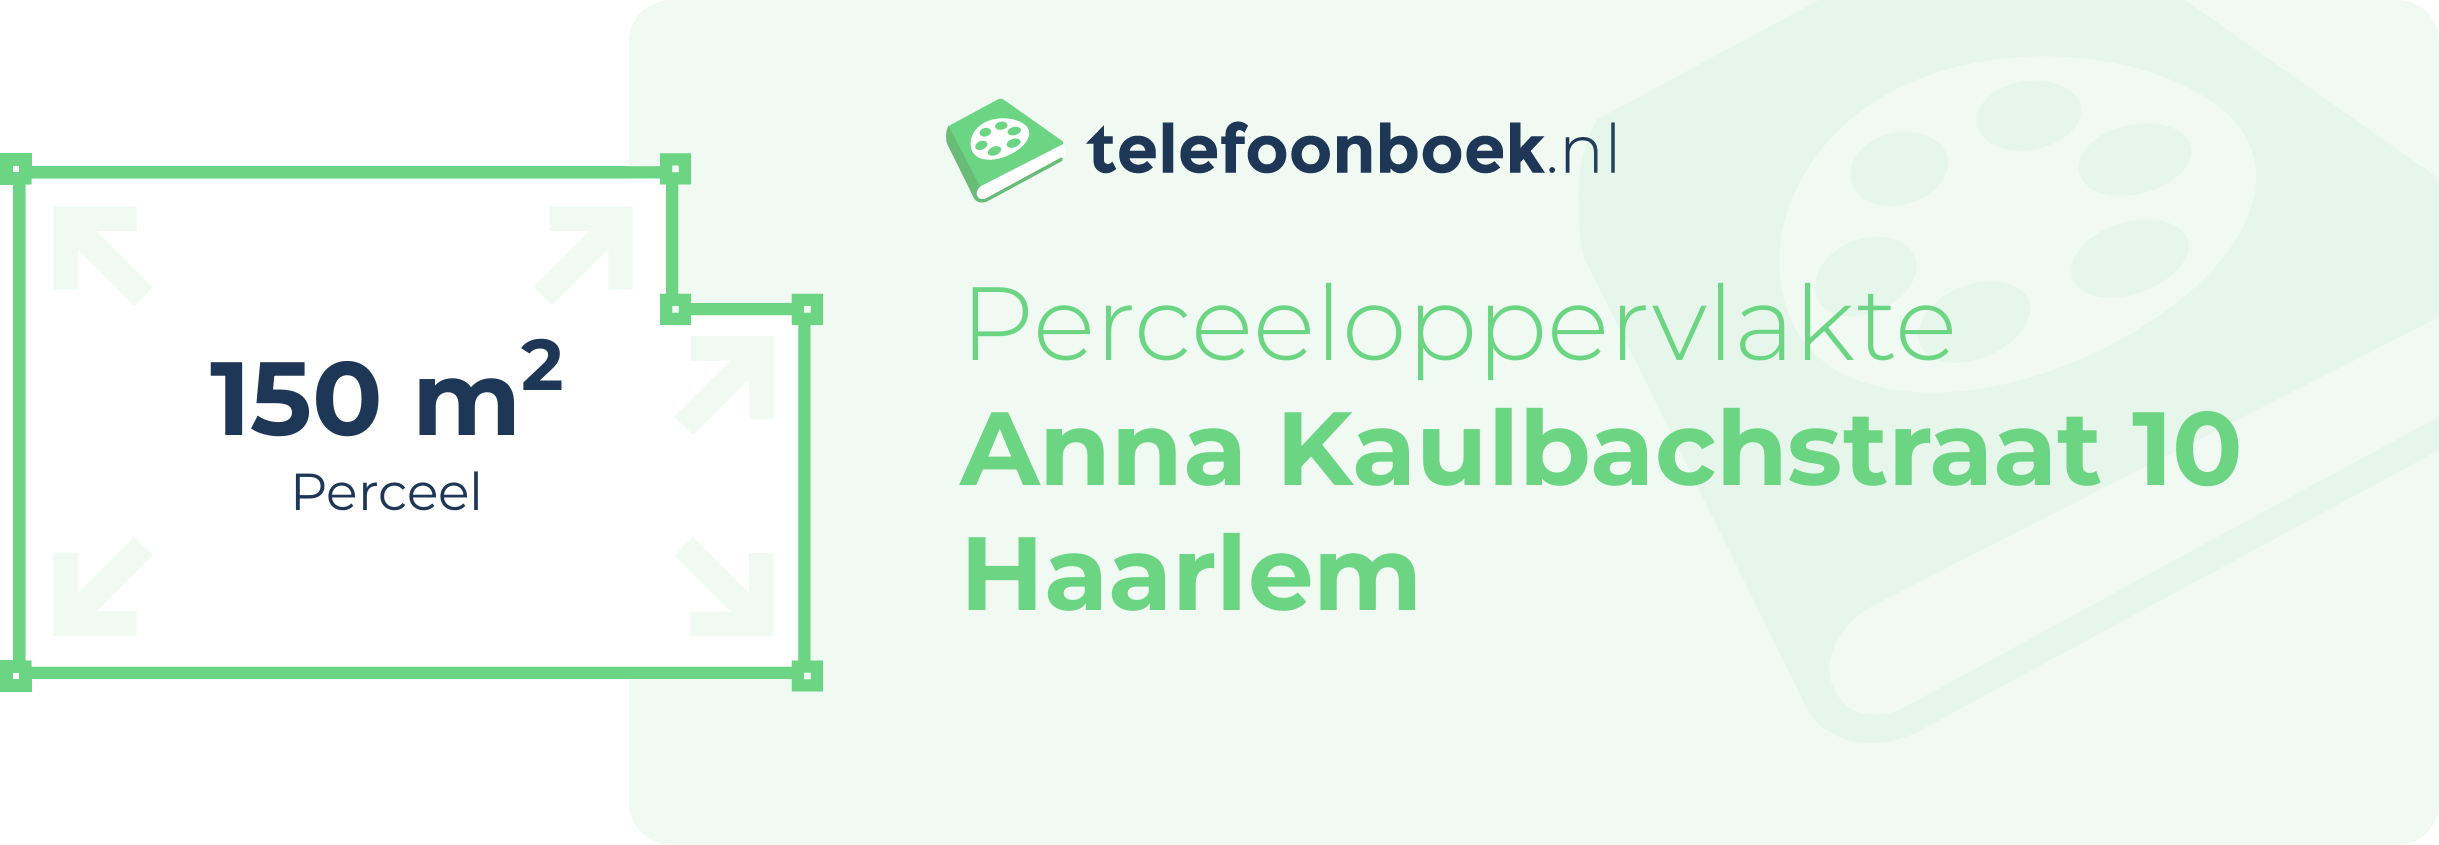 Perceeloppervlakte Anna Kaulbachstraat 10 Haarlem